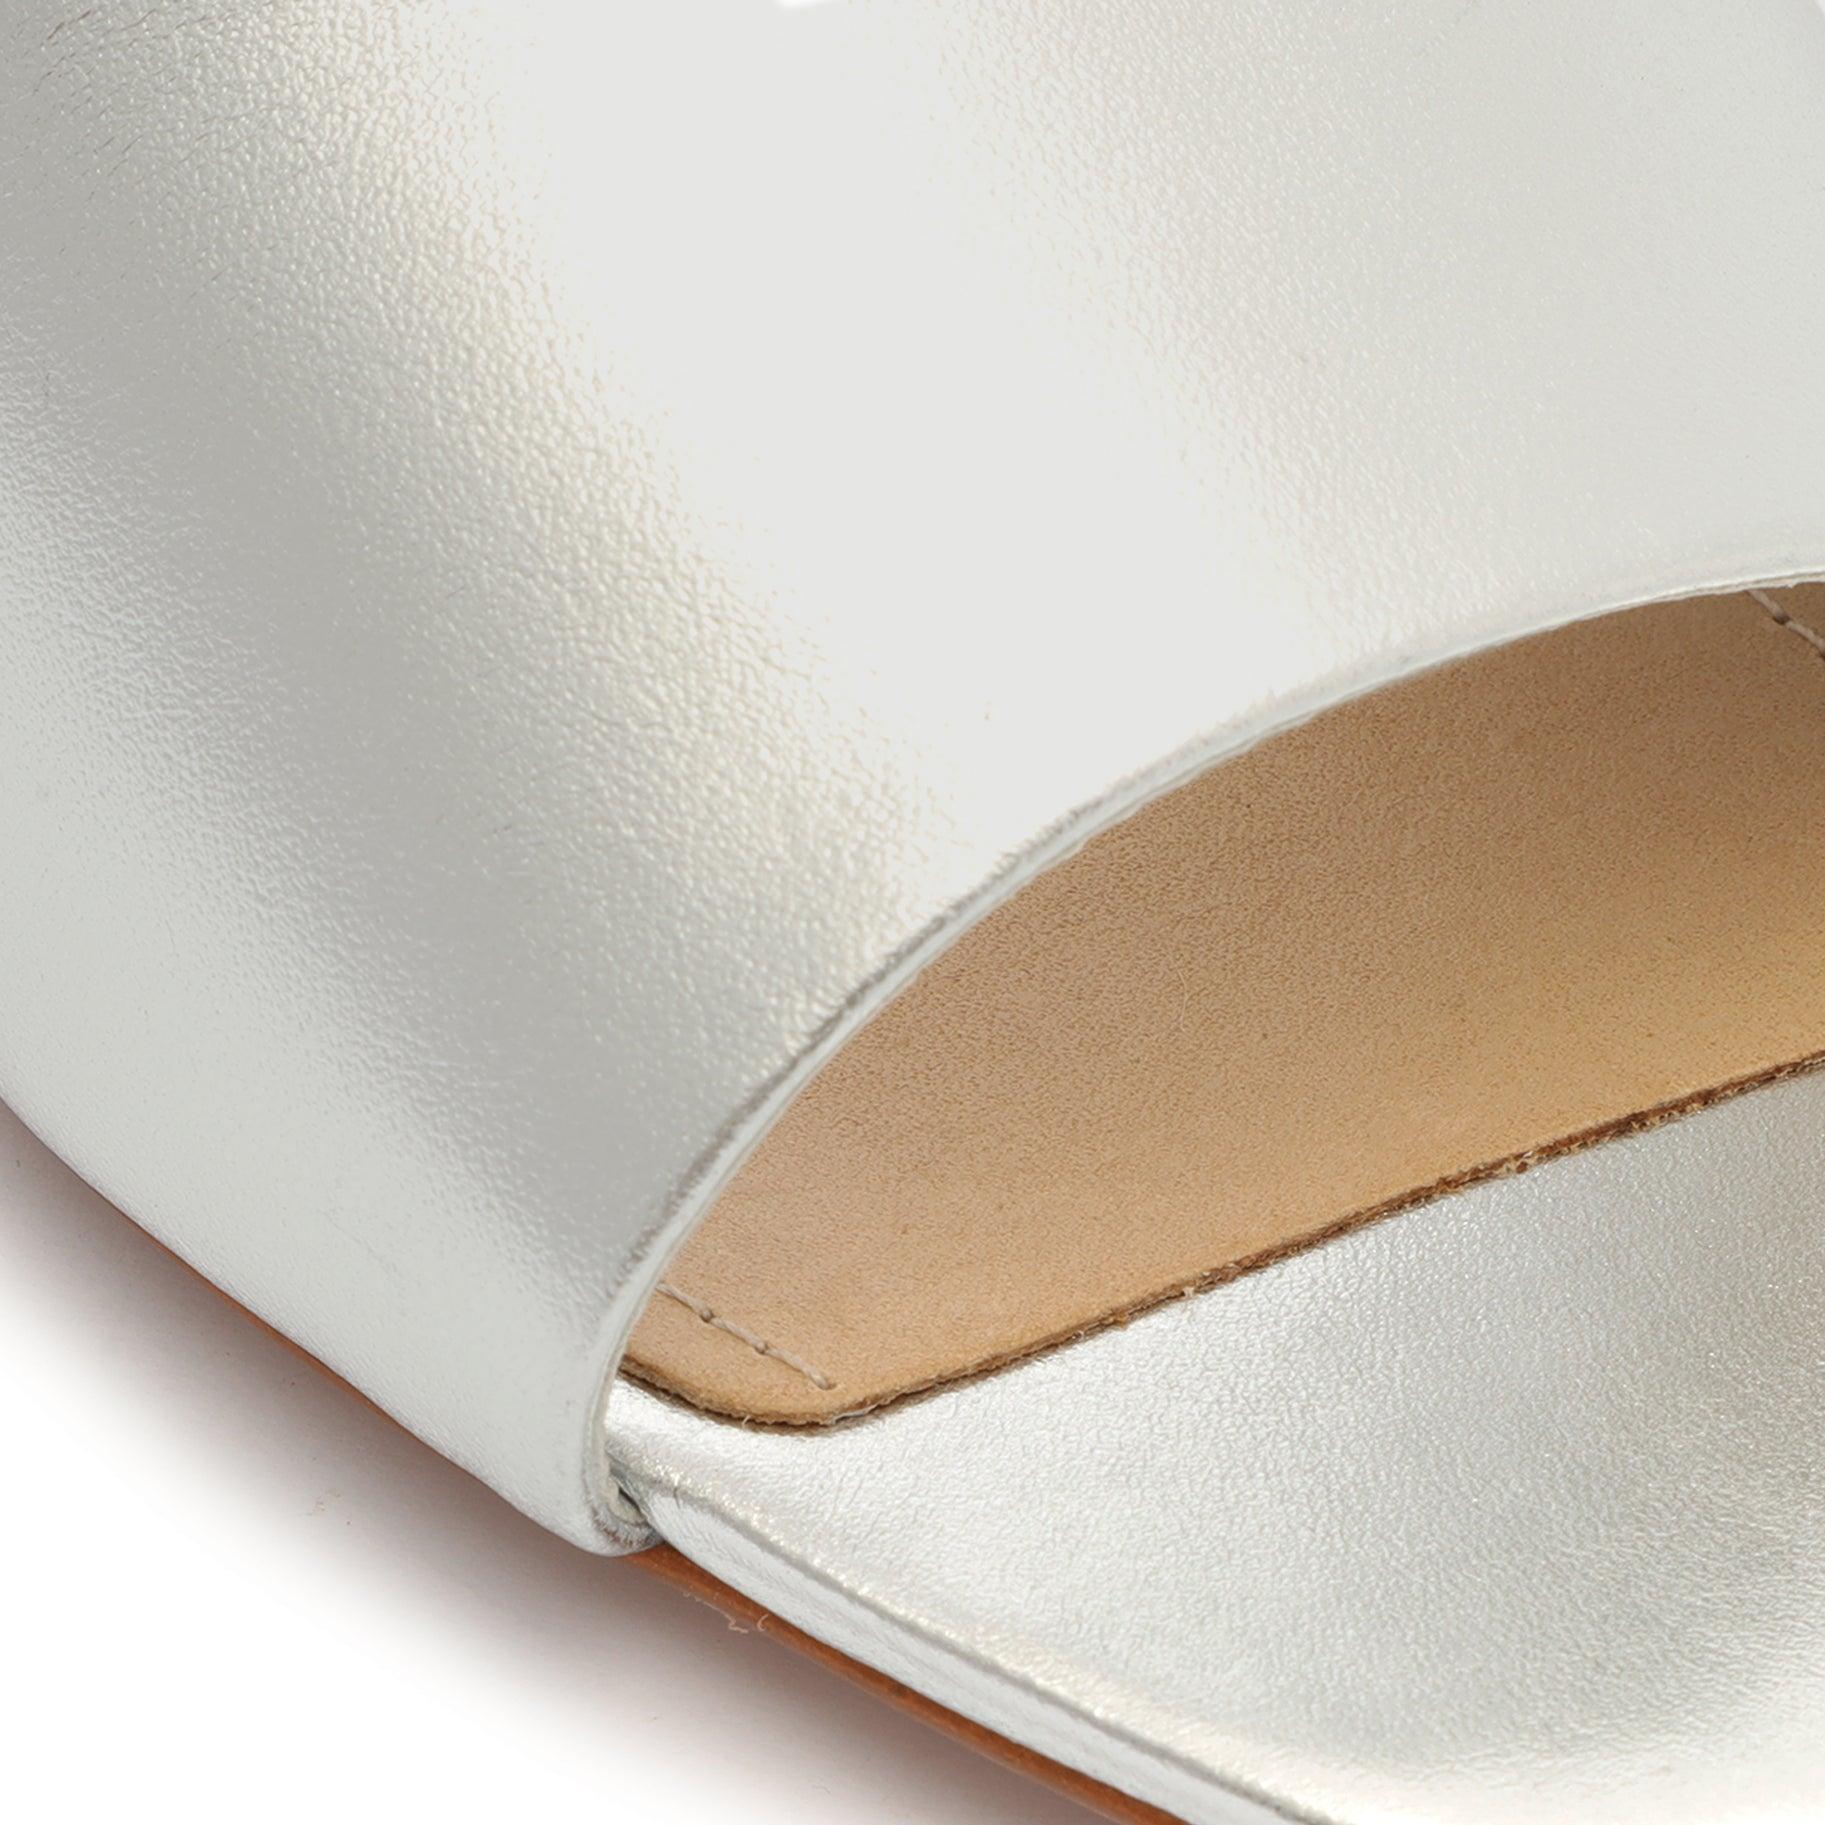 Dethalia Metallic Leather Sandal Product Image